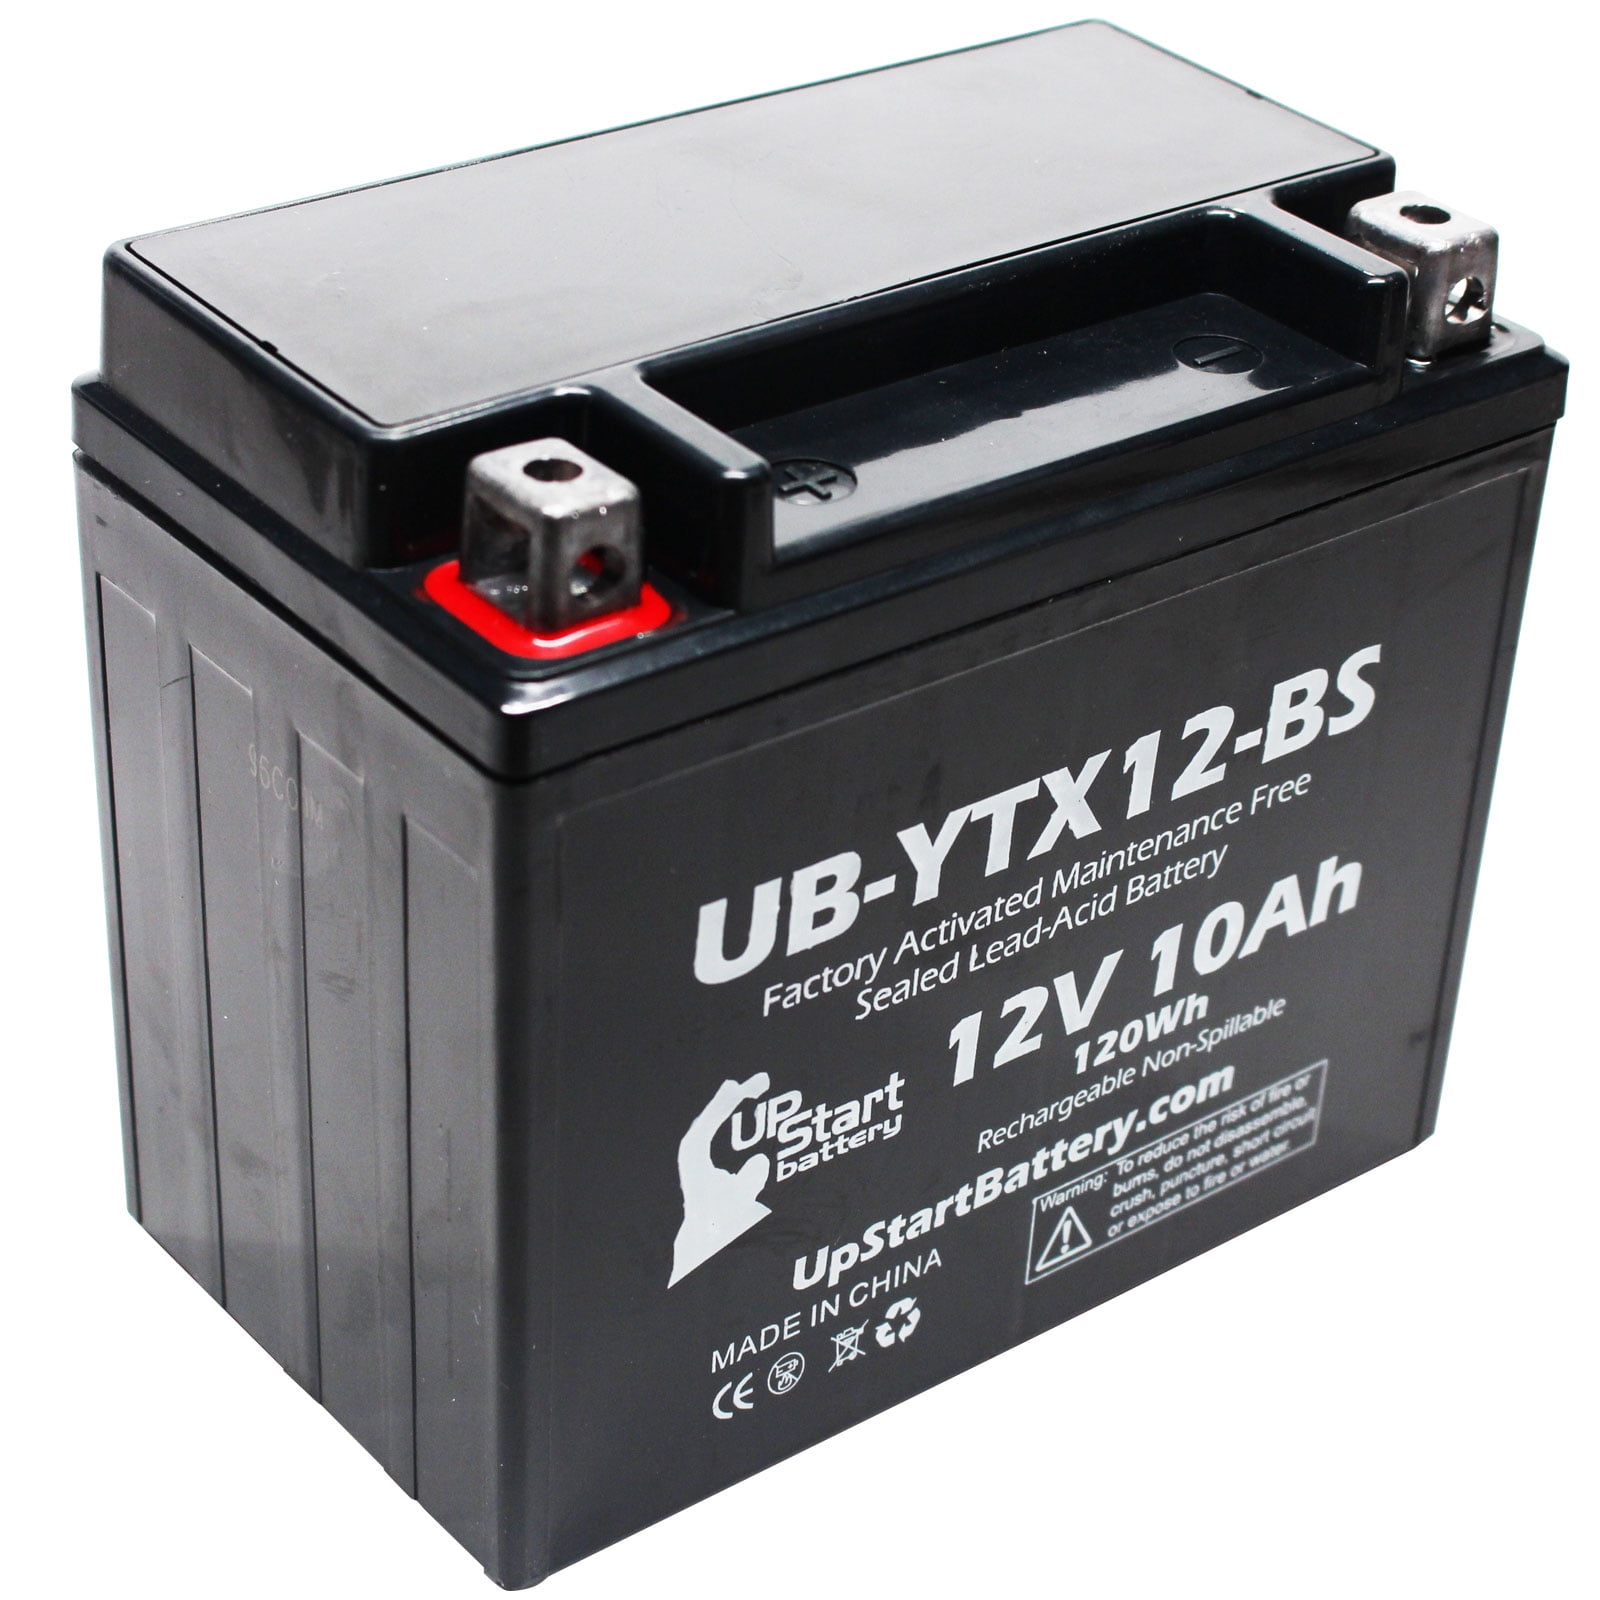 ES 250 CC Factory Activated UB-YTX12-BS 10Ah 12V Maintenance Free UpStart Battery Replacement 2003 Honda TRX250 Recon ATV Battery 